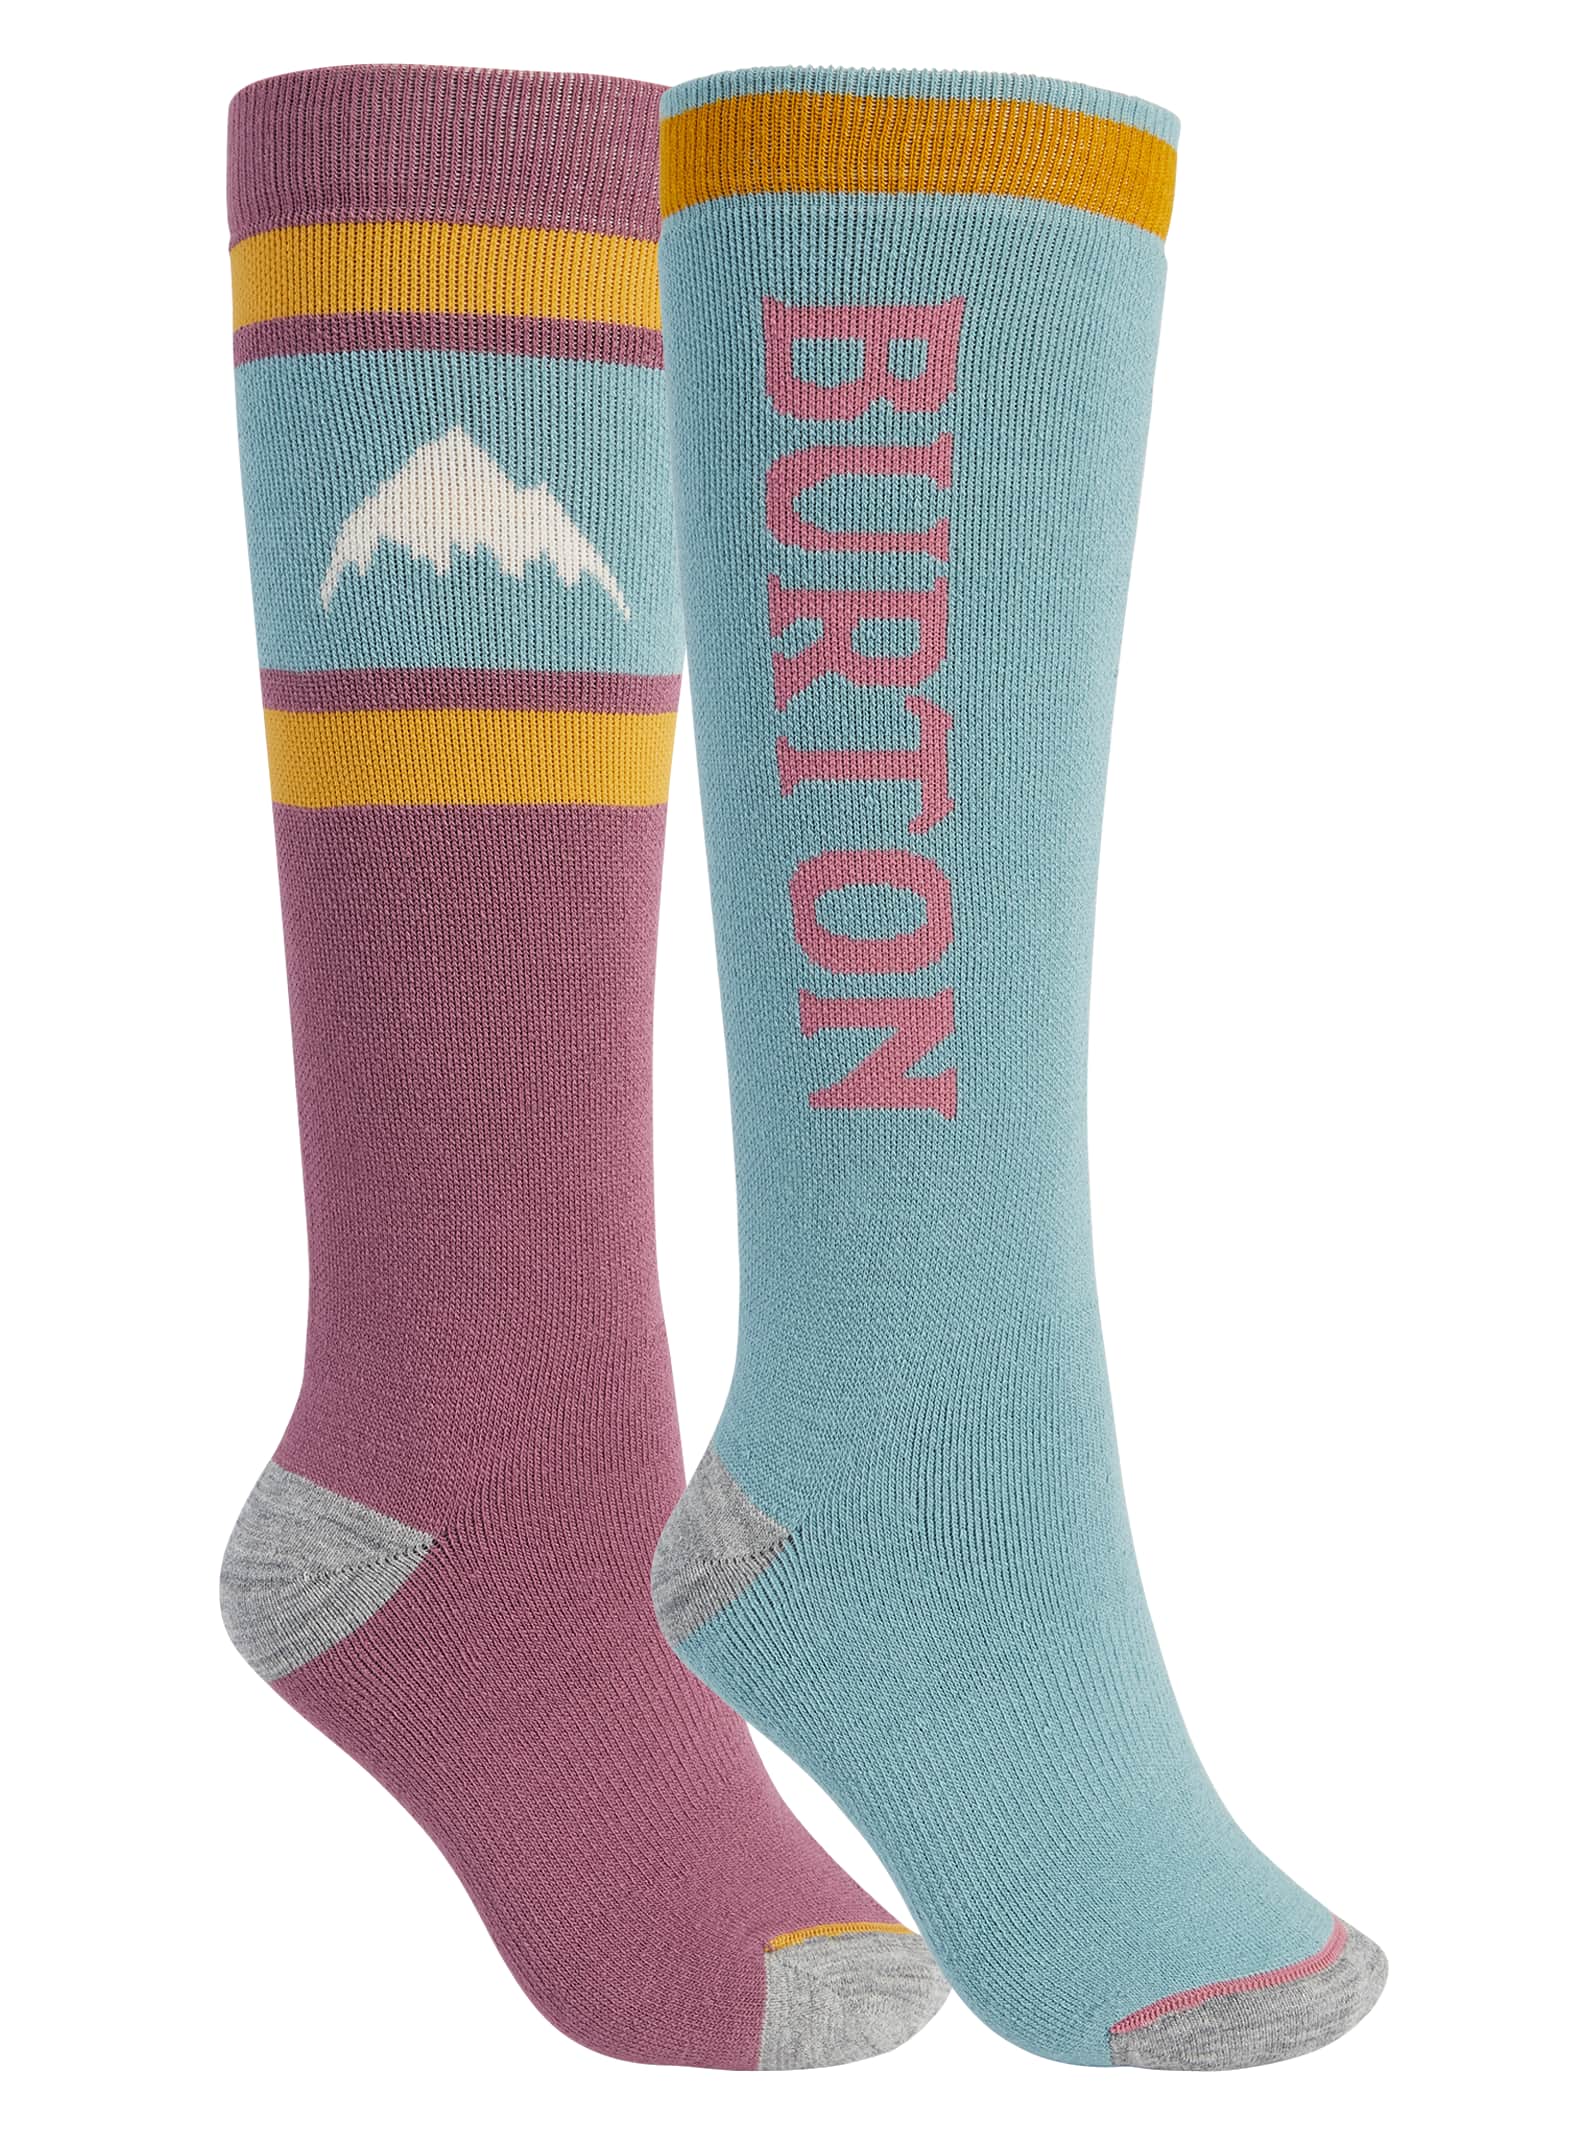 Men's, Women's, and Kids' Socks | Burton Snowboards US